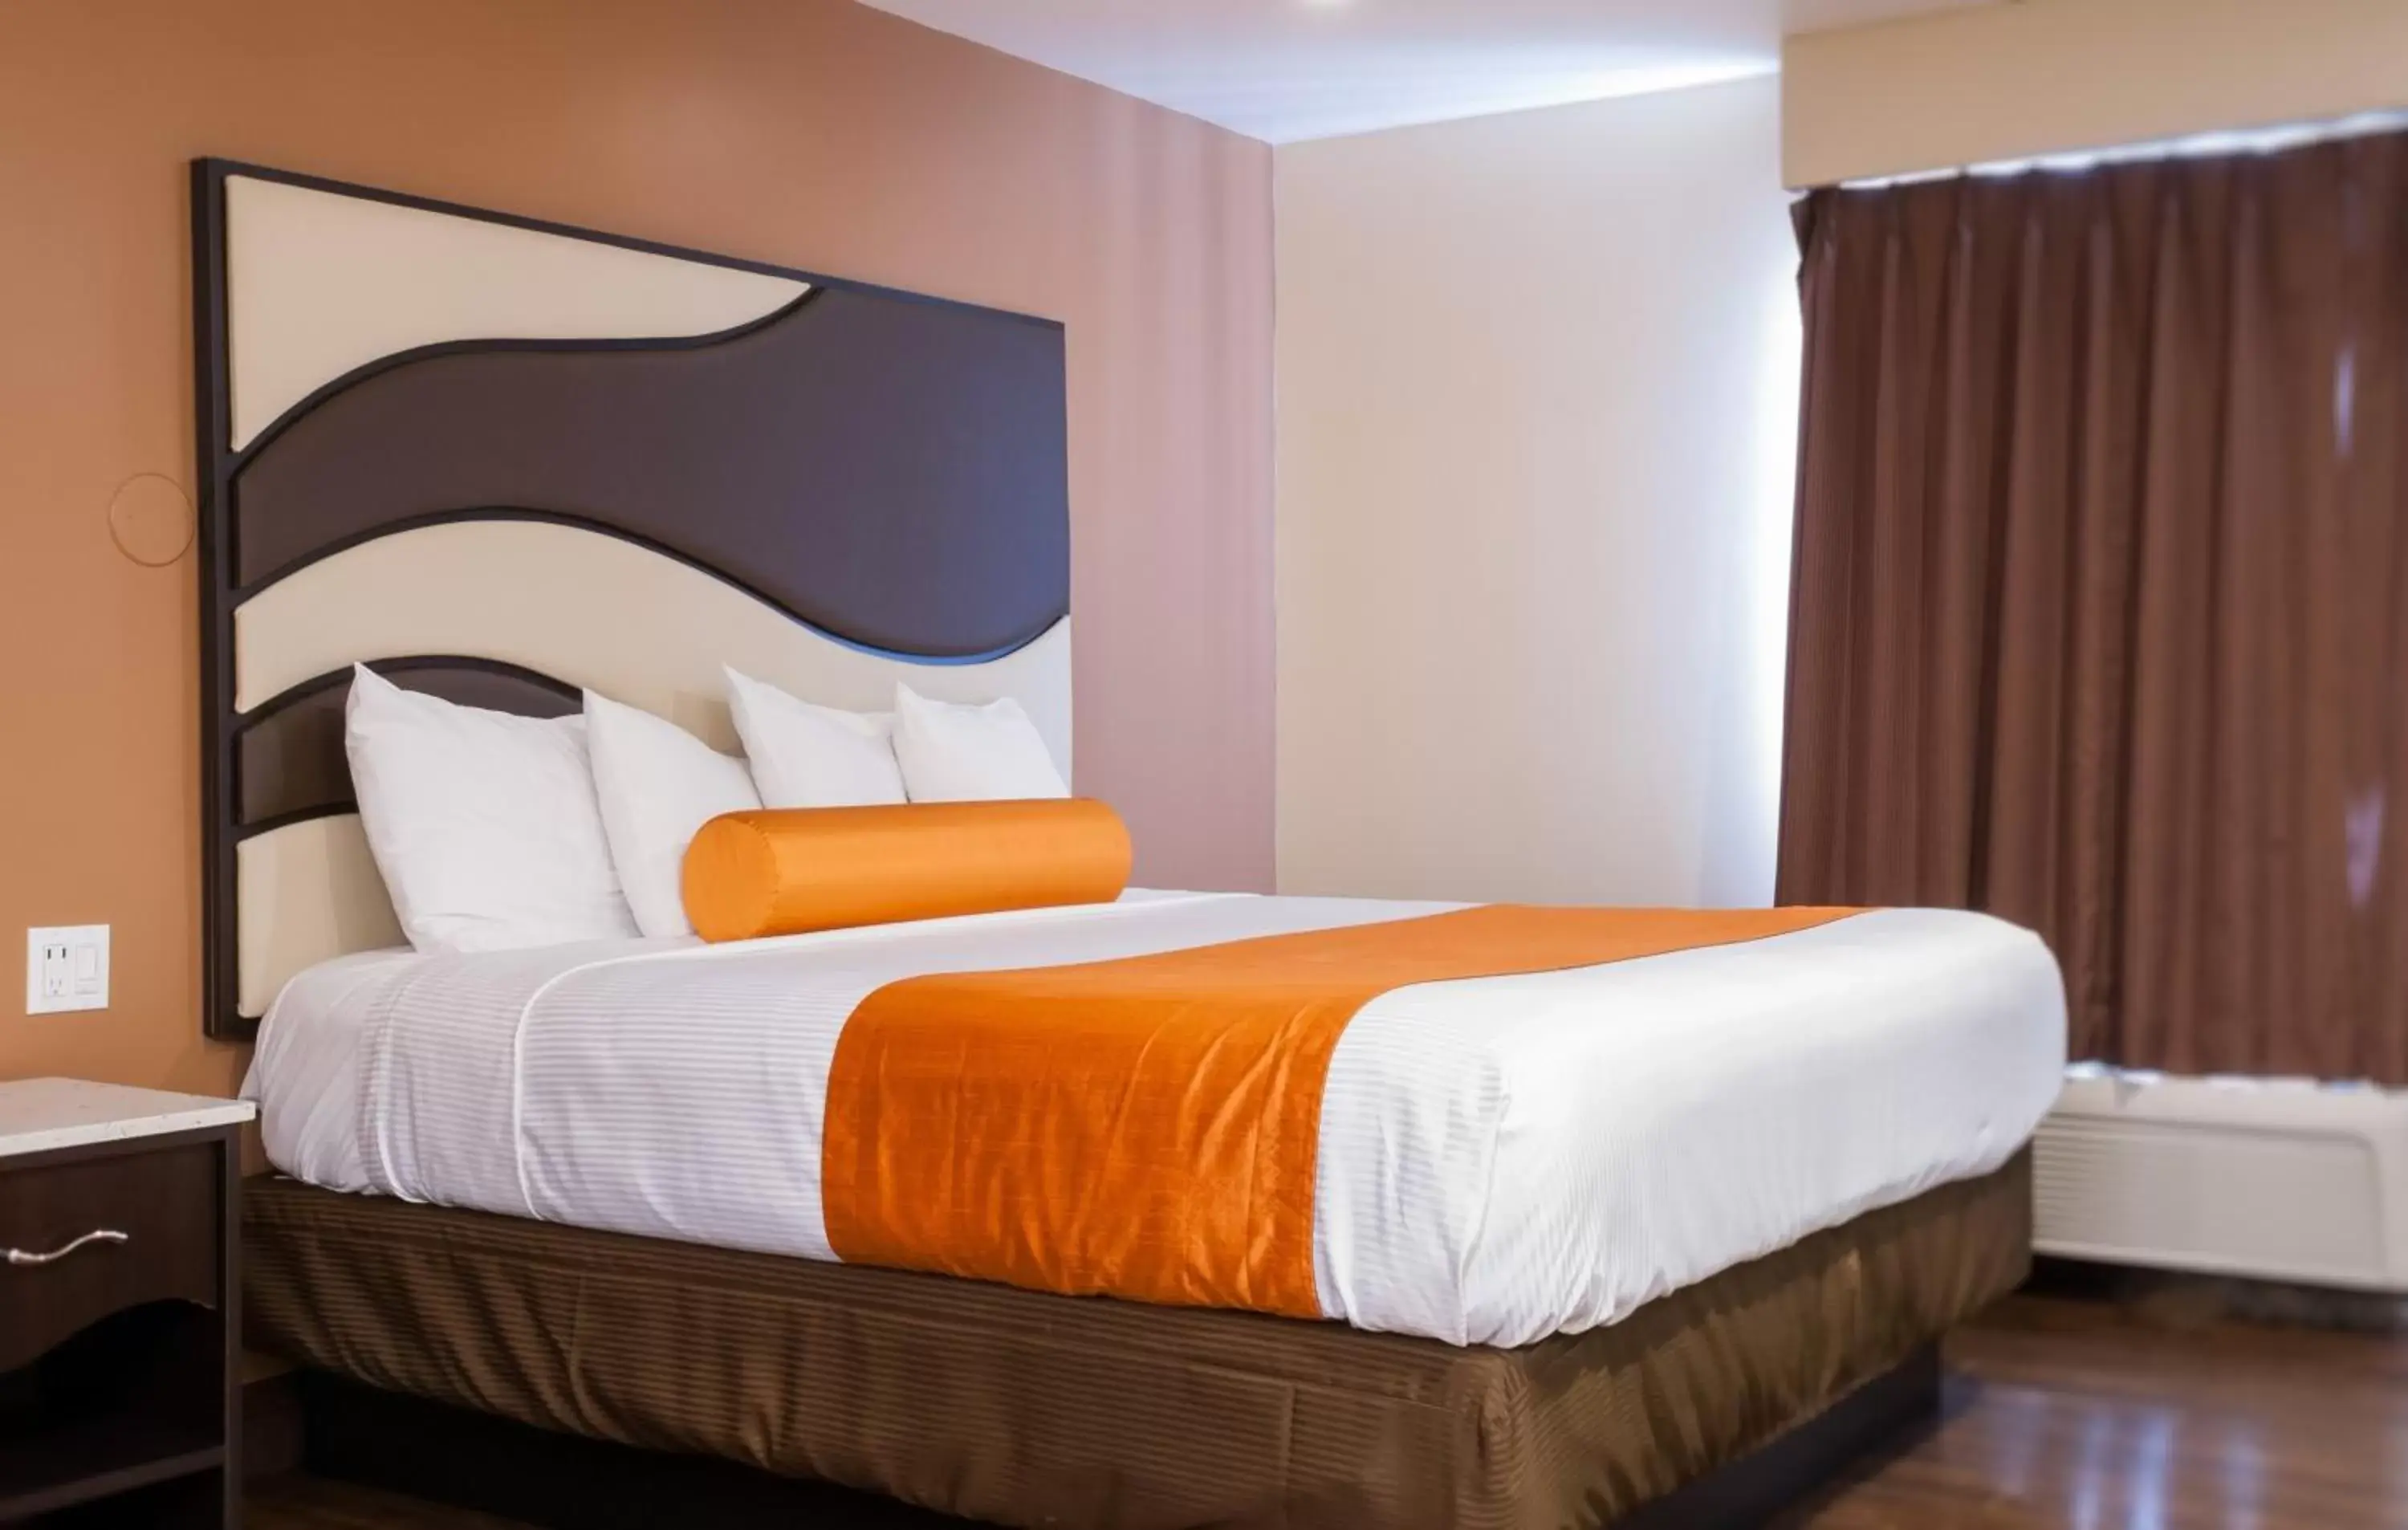 Bed, Room Photo in Redondo Pier Inn